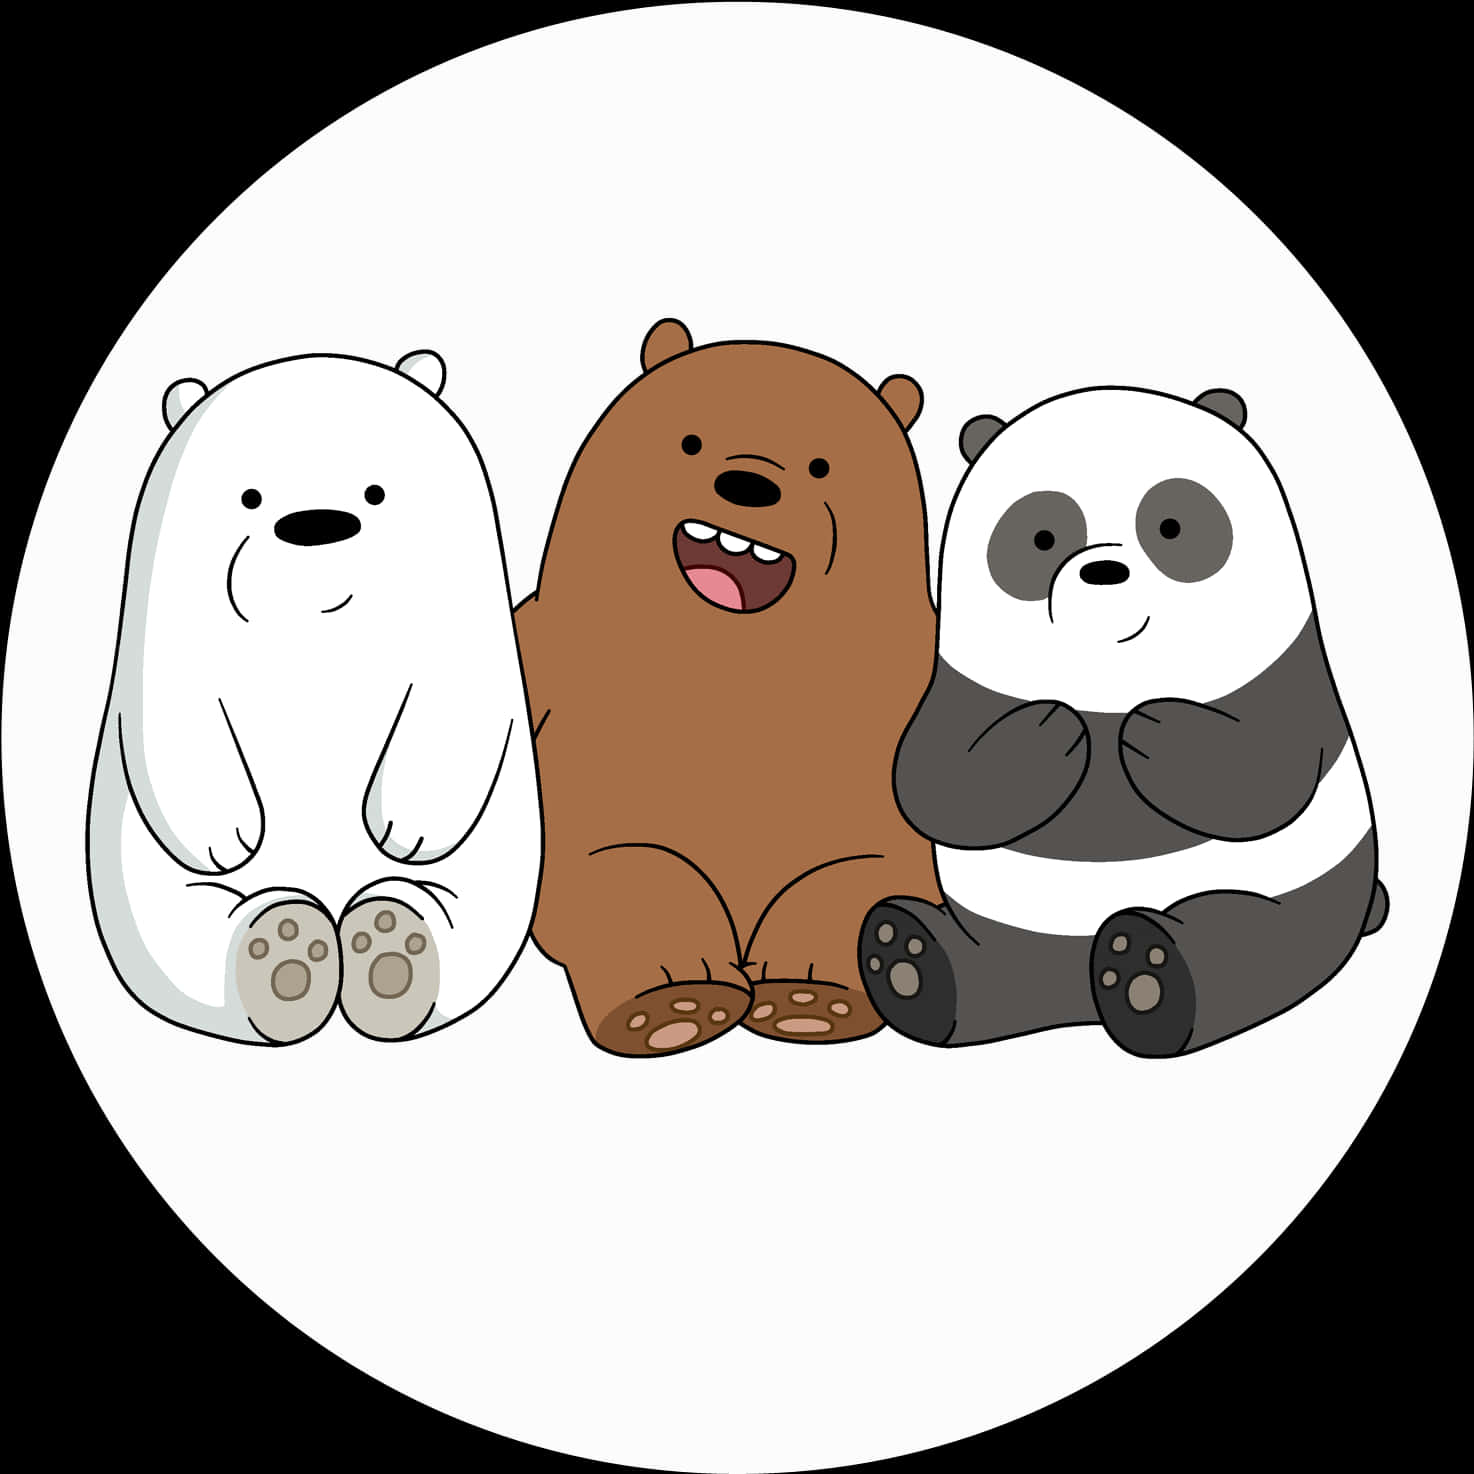 Three Cartoon Bears Friends